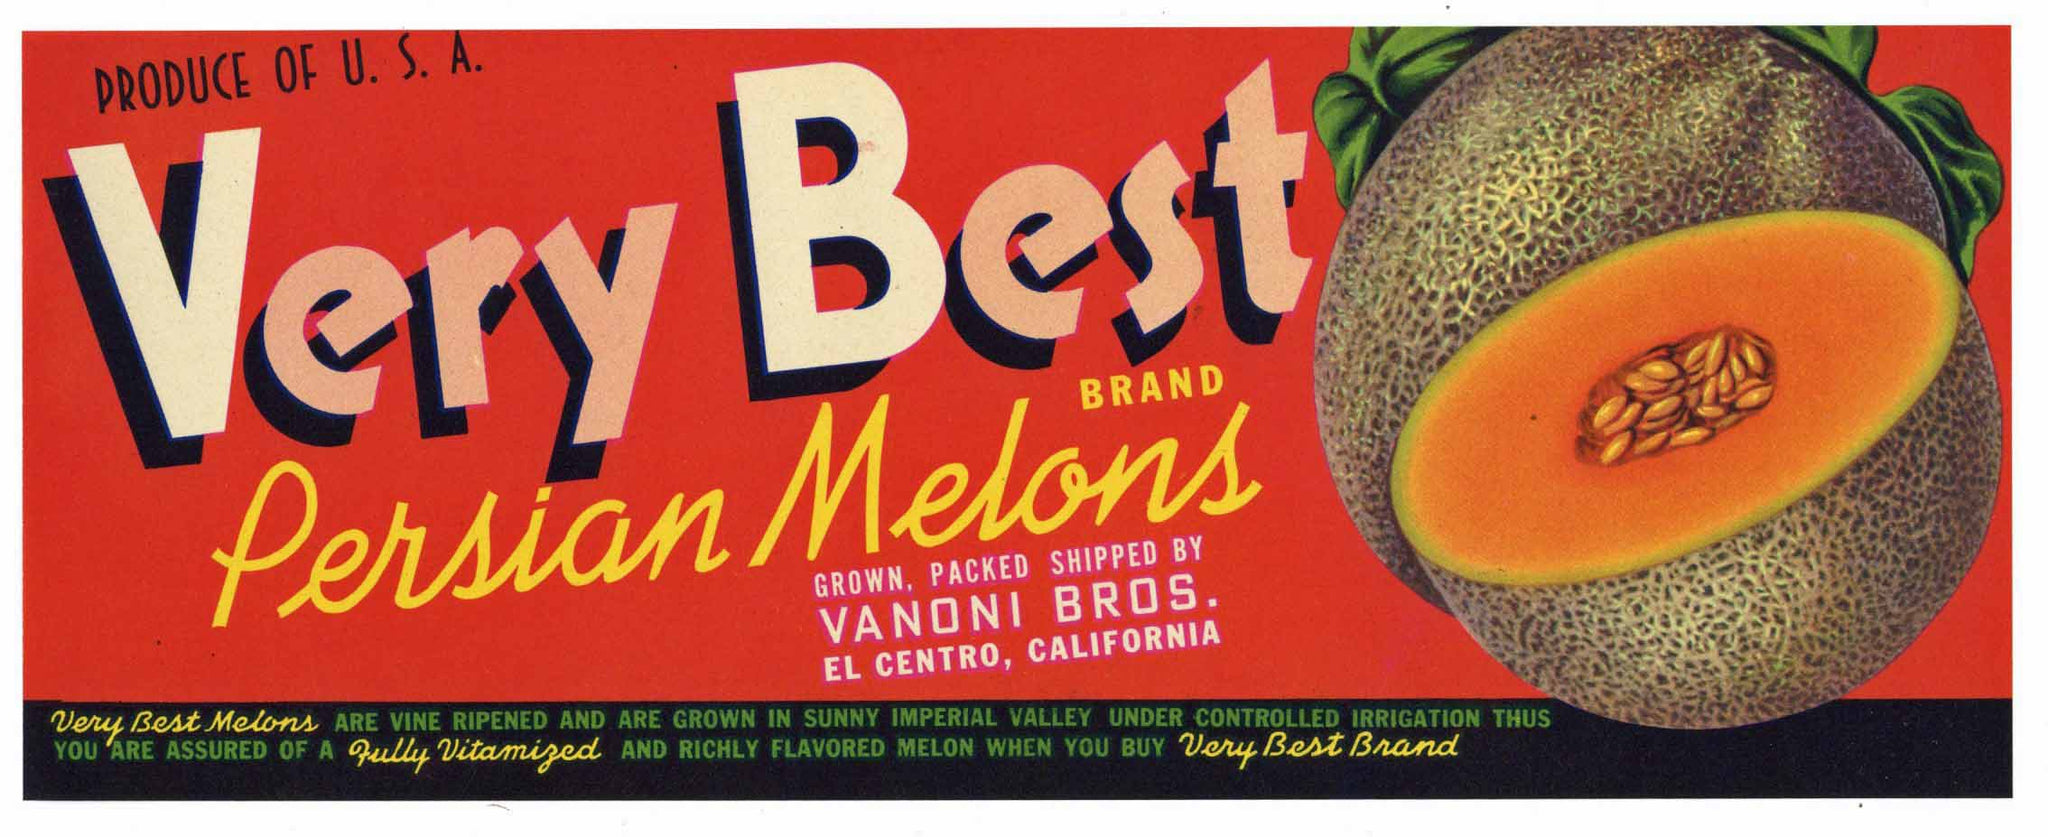 Very Best Brand Vintage El Centro Persian Melon Crate Label